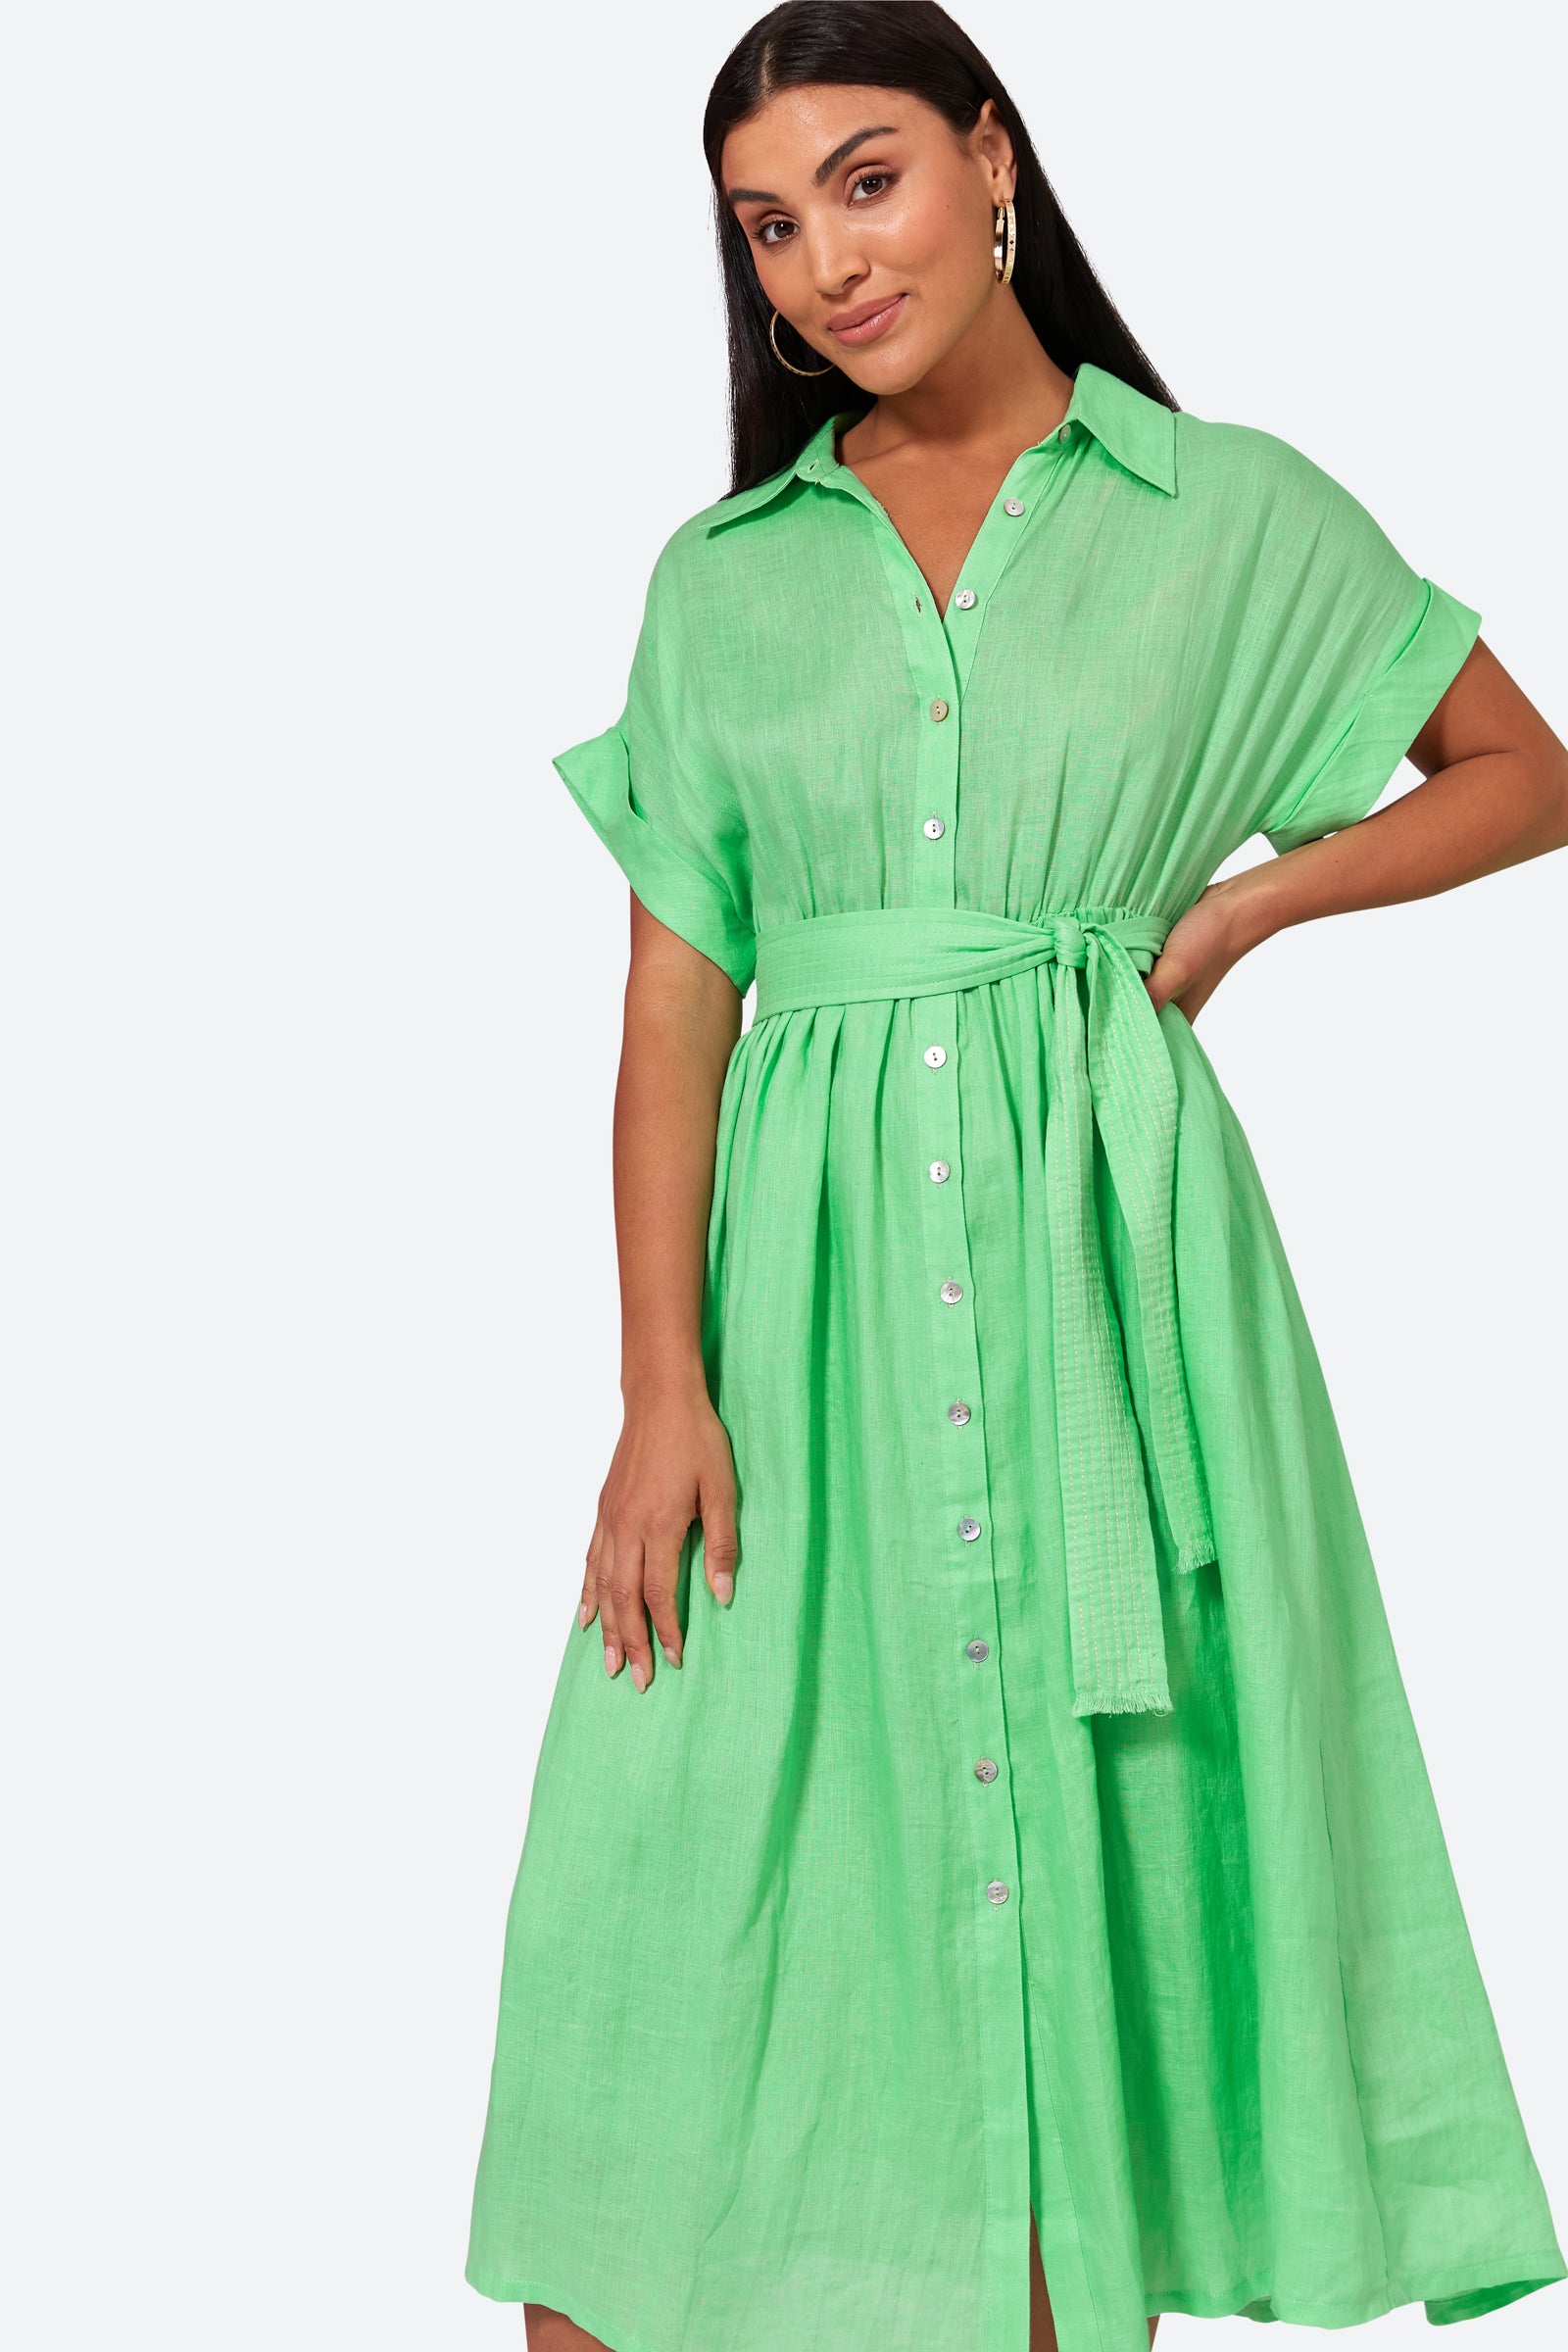 La Vie Shirt Dress - Kiwi - eb&ive Clothing - Shirt Dress Maxi Linen